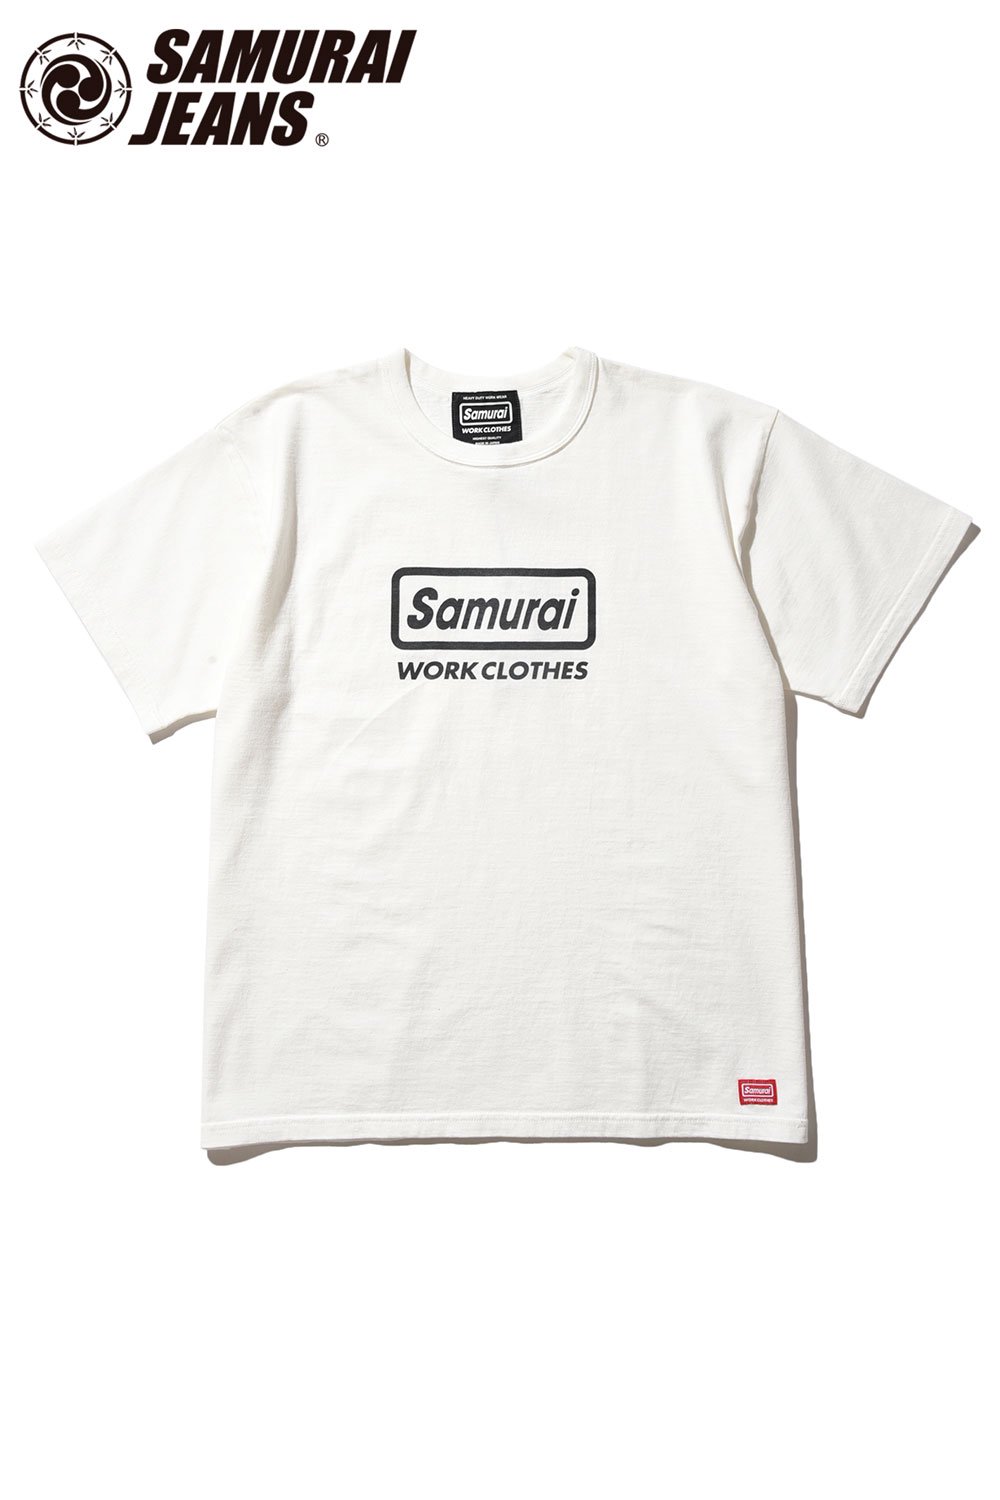 SAMURAI JEANS(サムライジーンズ) Tシャツ SAMURAI WORK CLOTHES TEE 